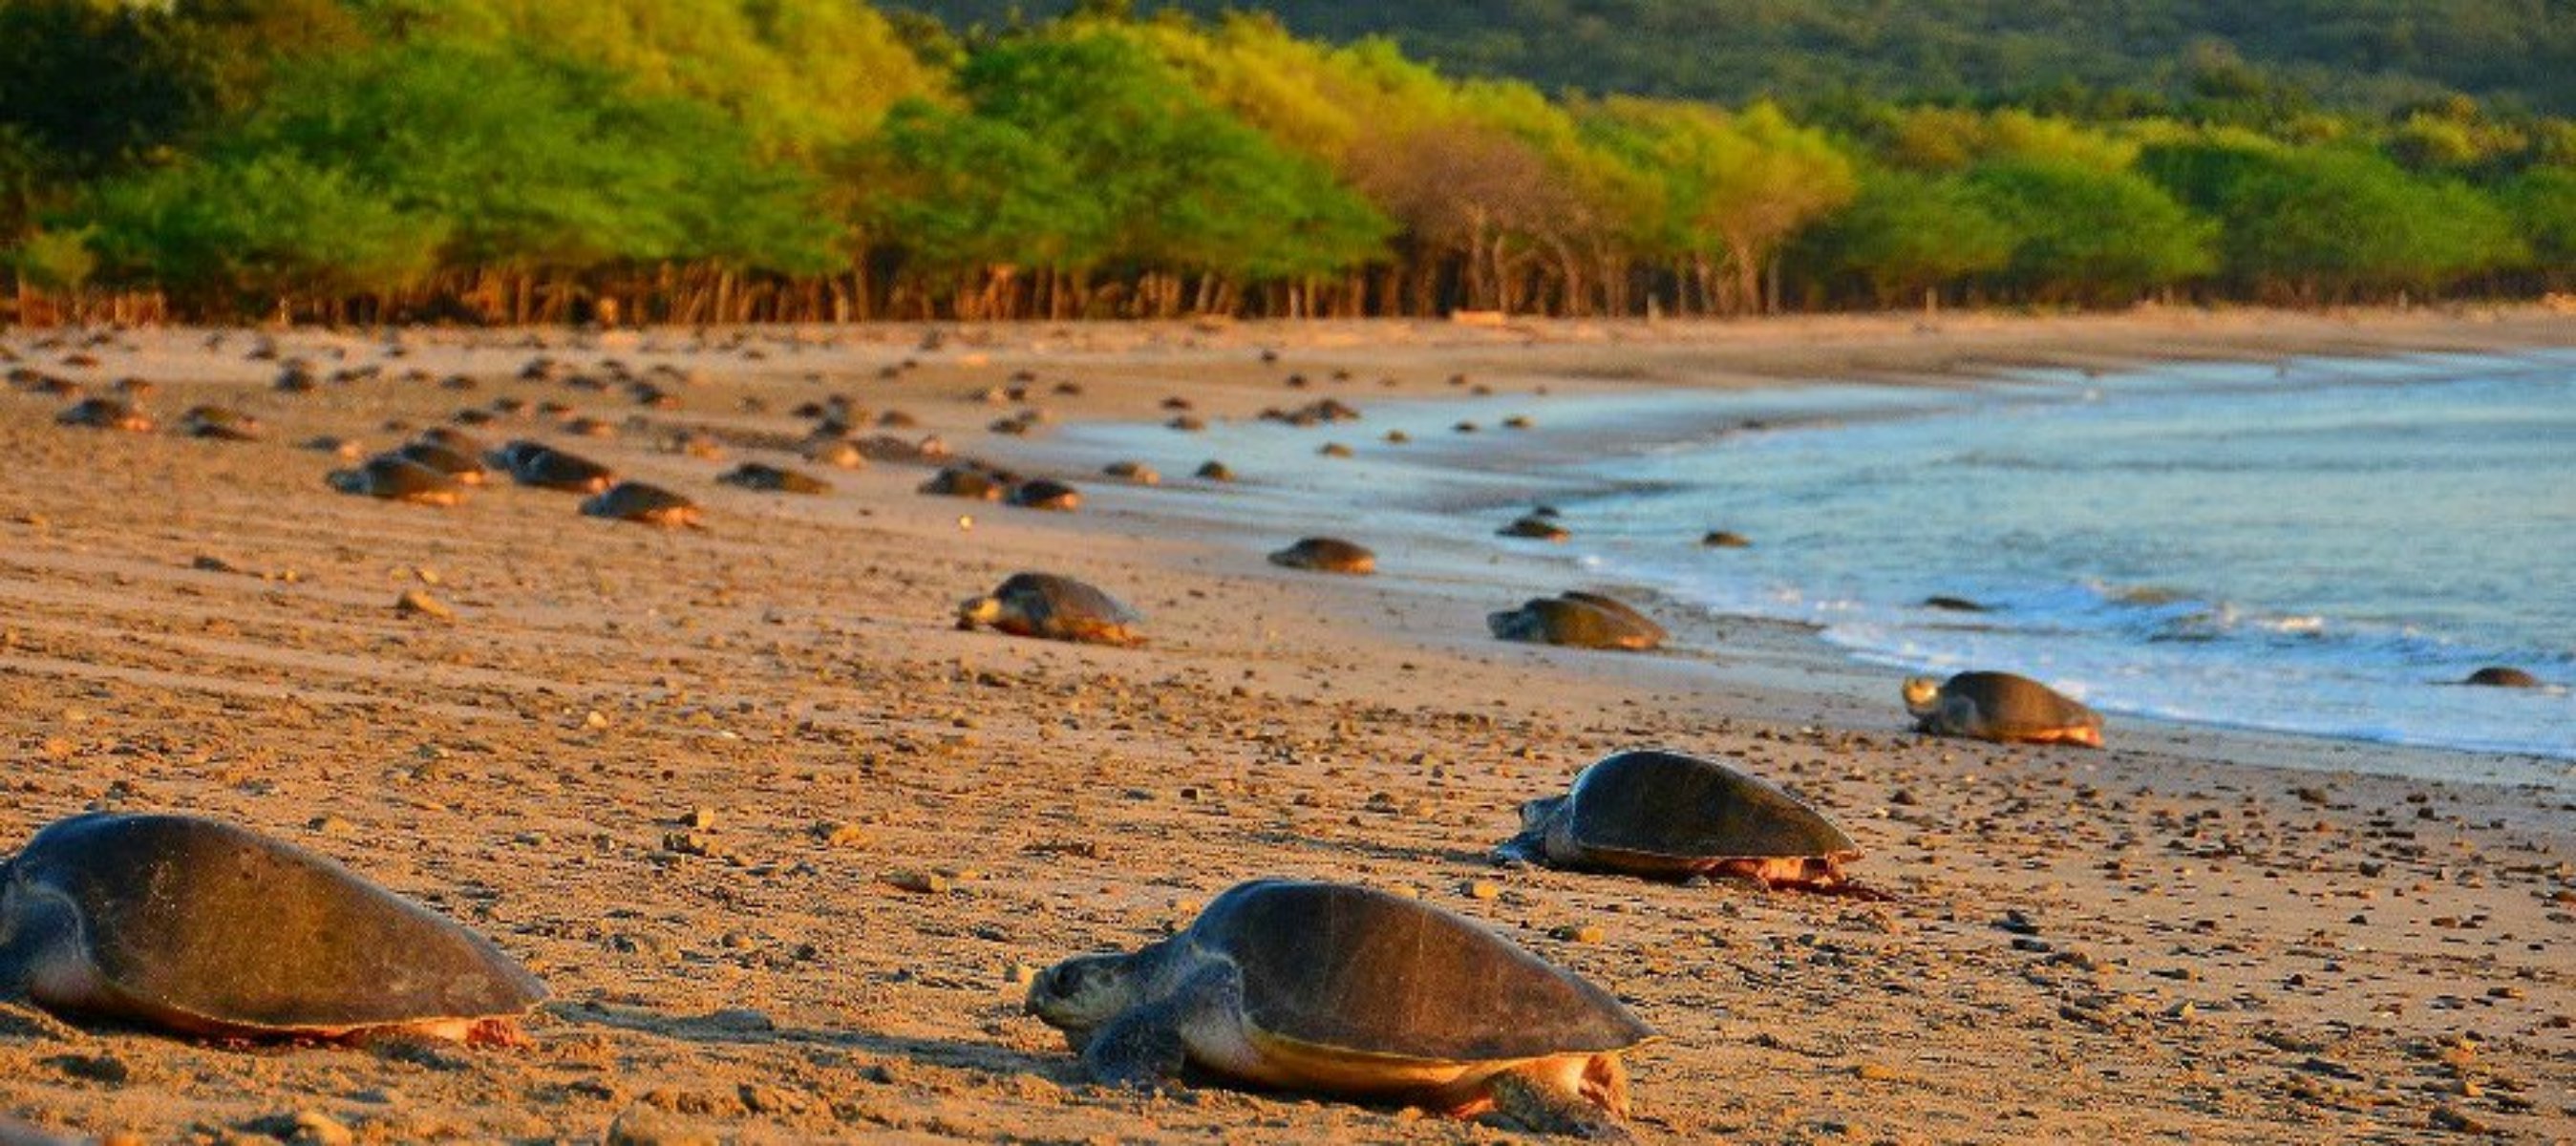 viajes-a-nicaragua-desove-tortugas